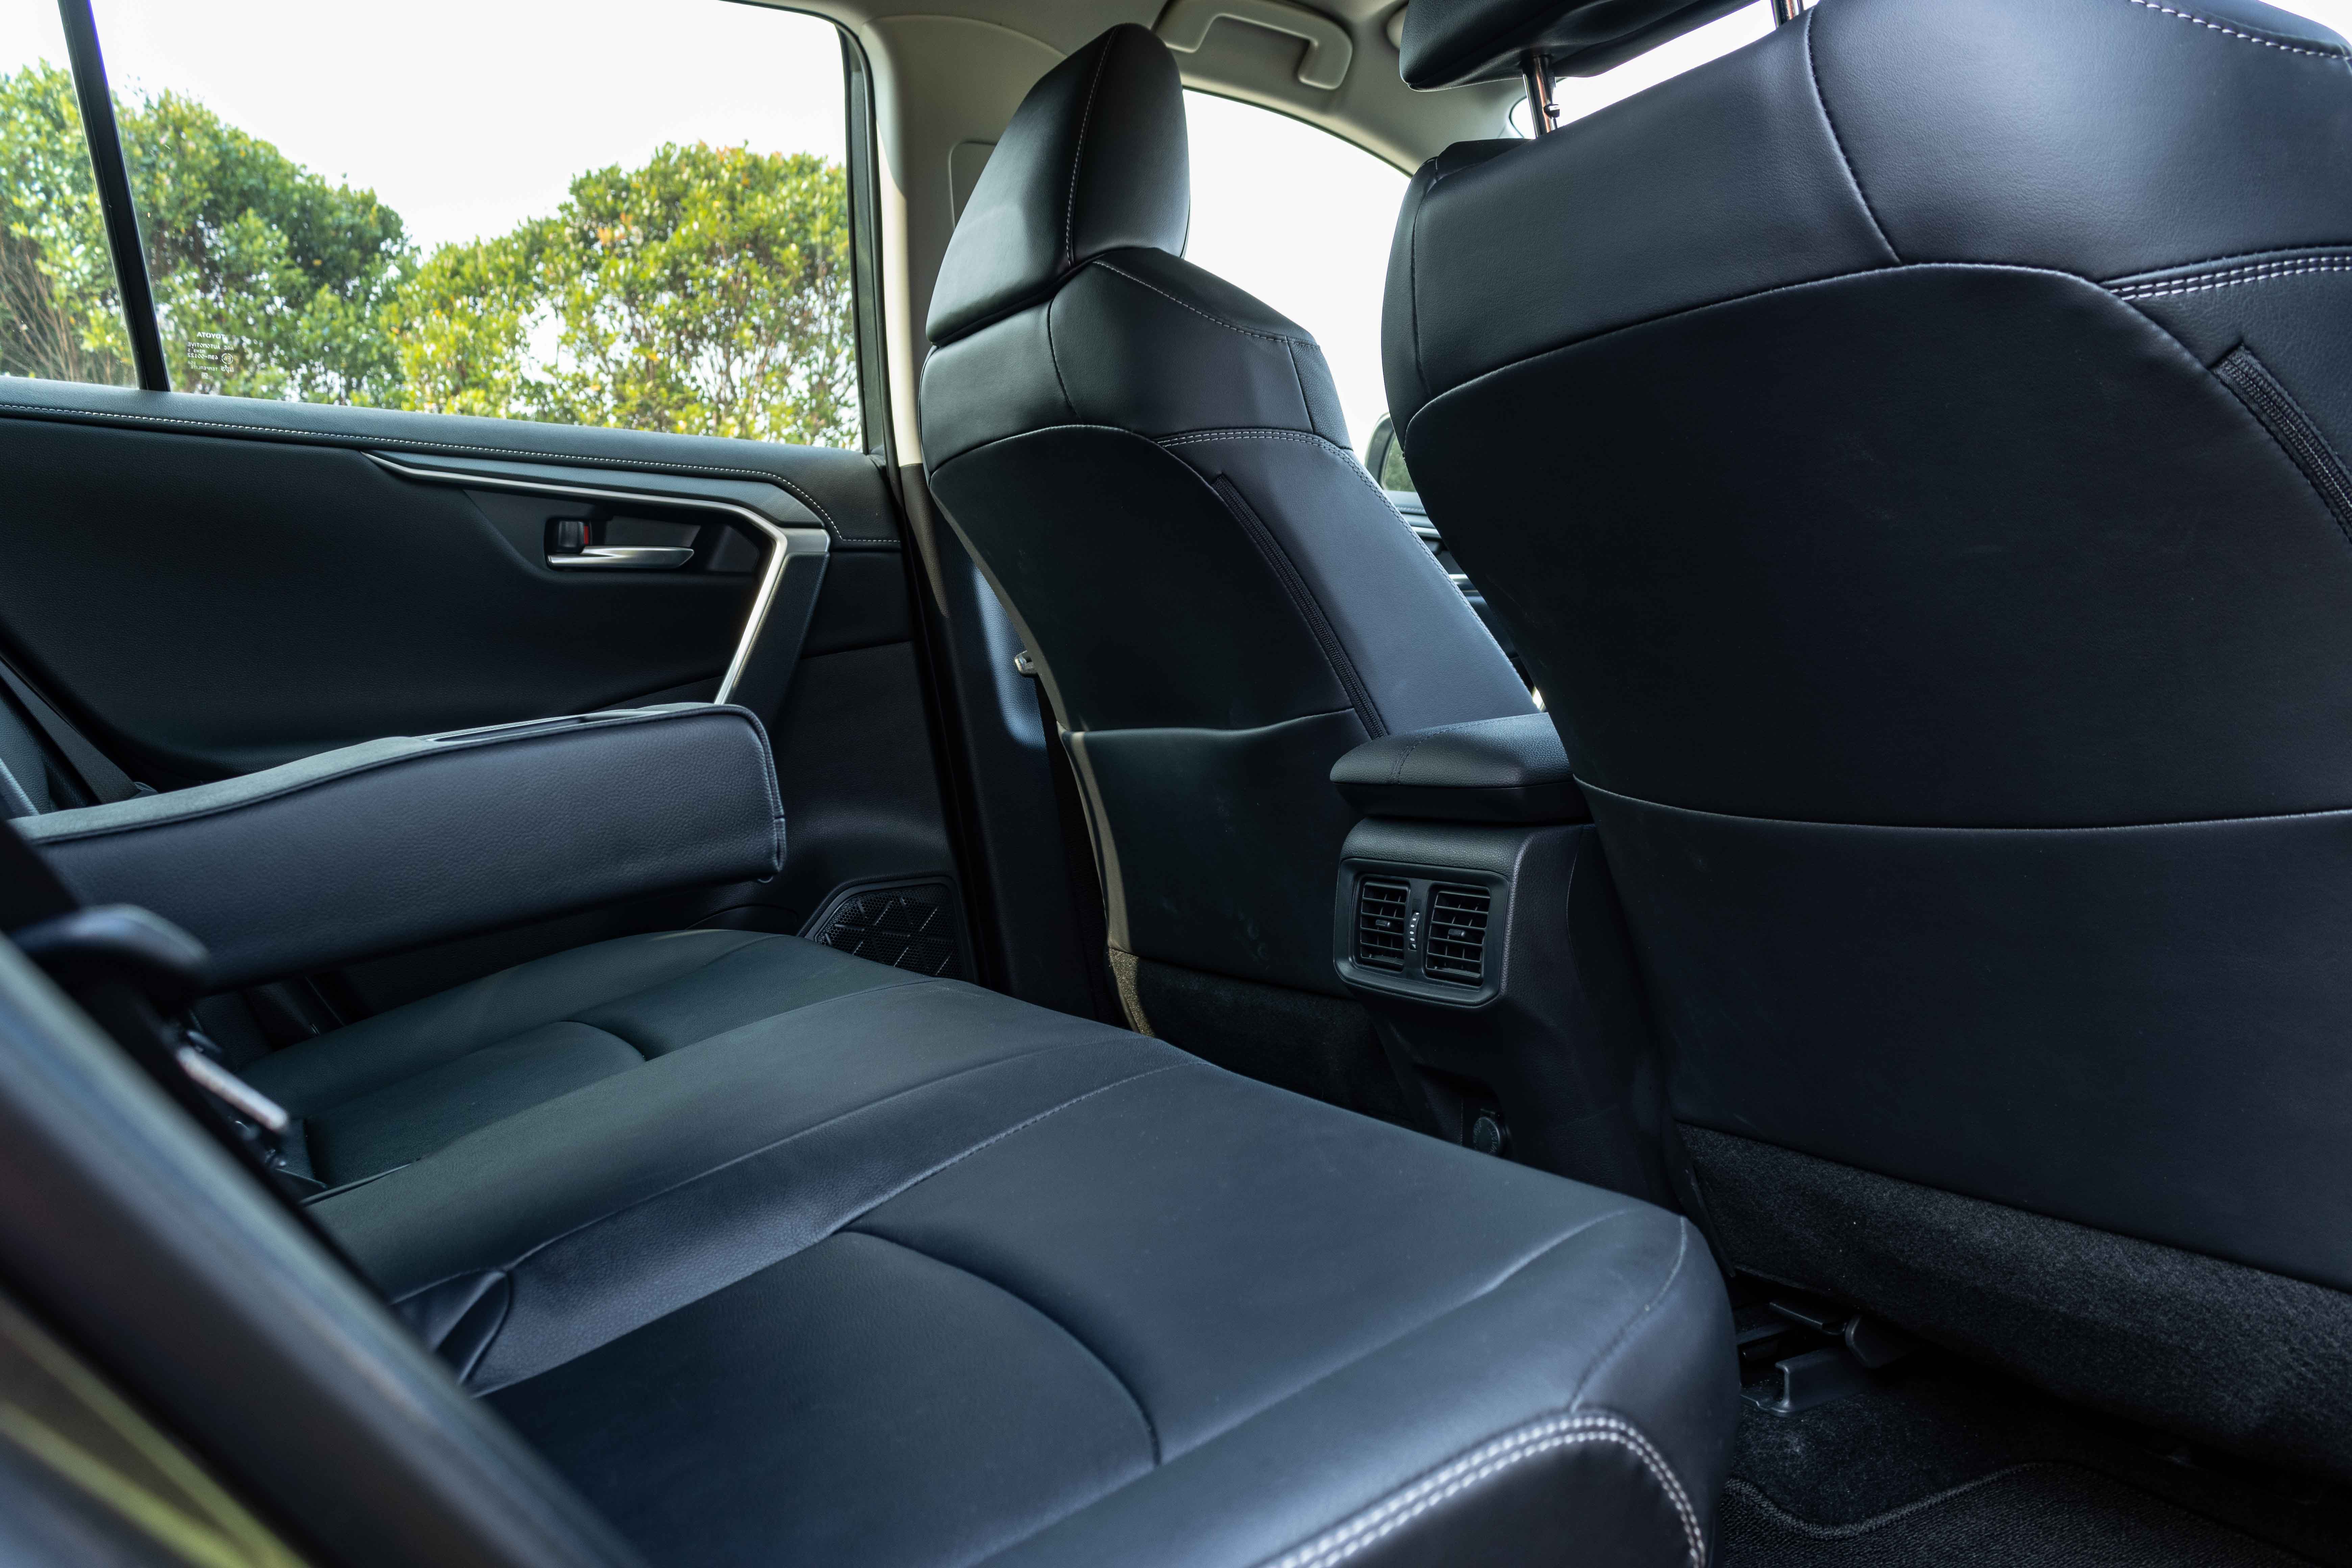 2022 Toyota RAV4 Hybrid Singapore - Rear seats